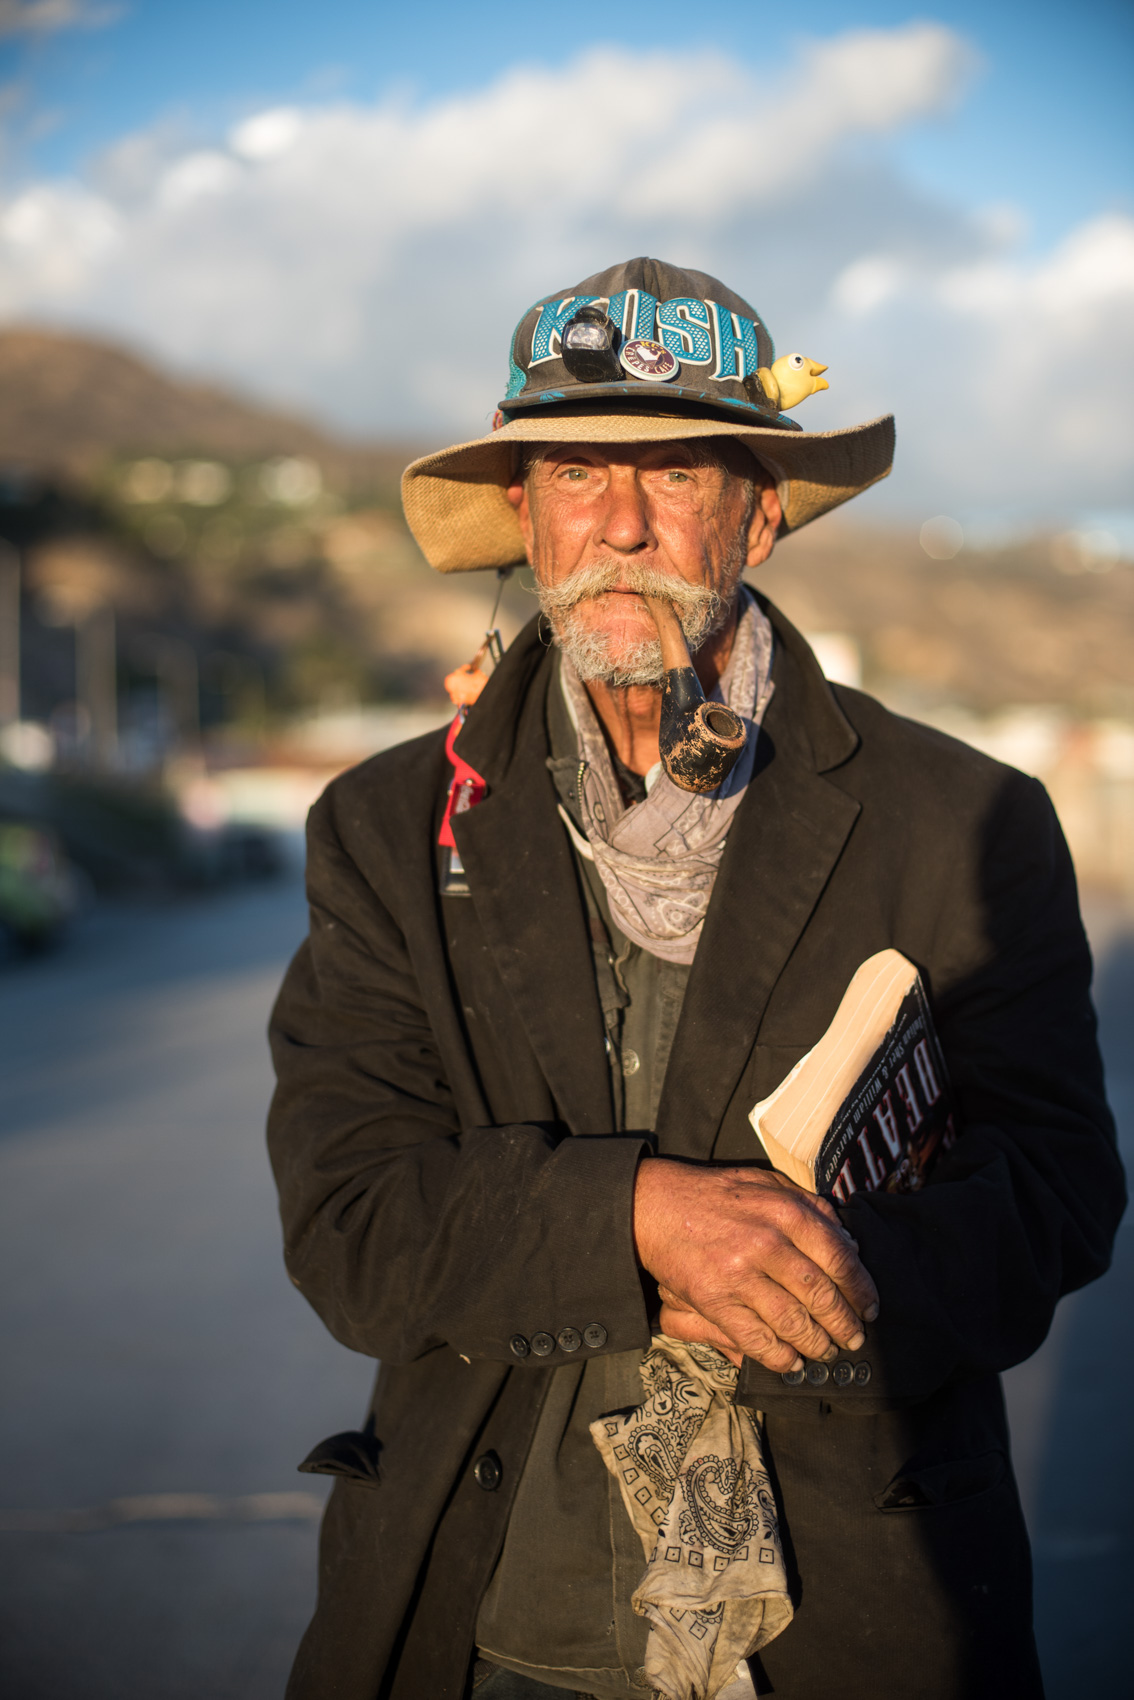 Portrait of a homeless man in Malibu, Calif.